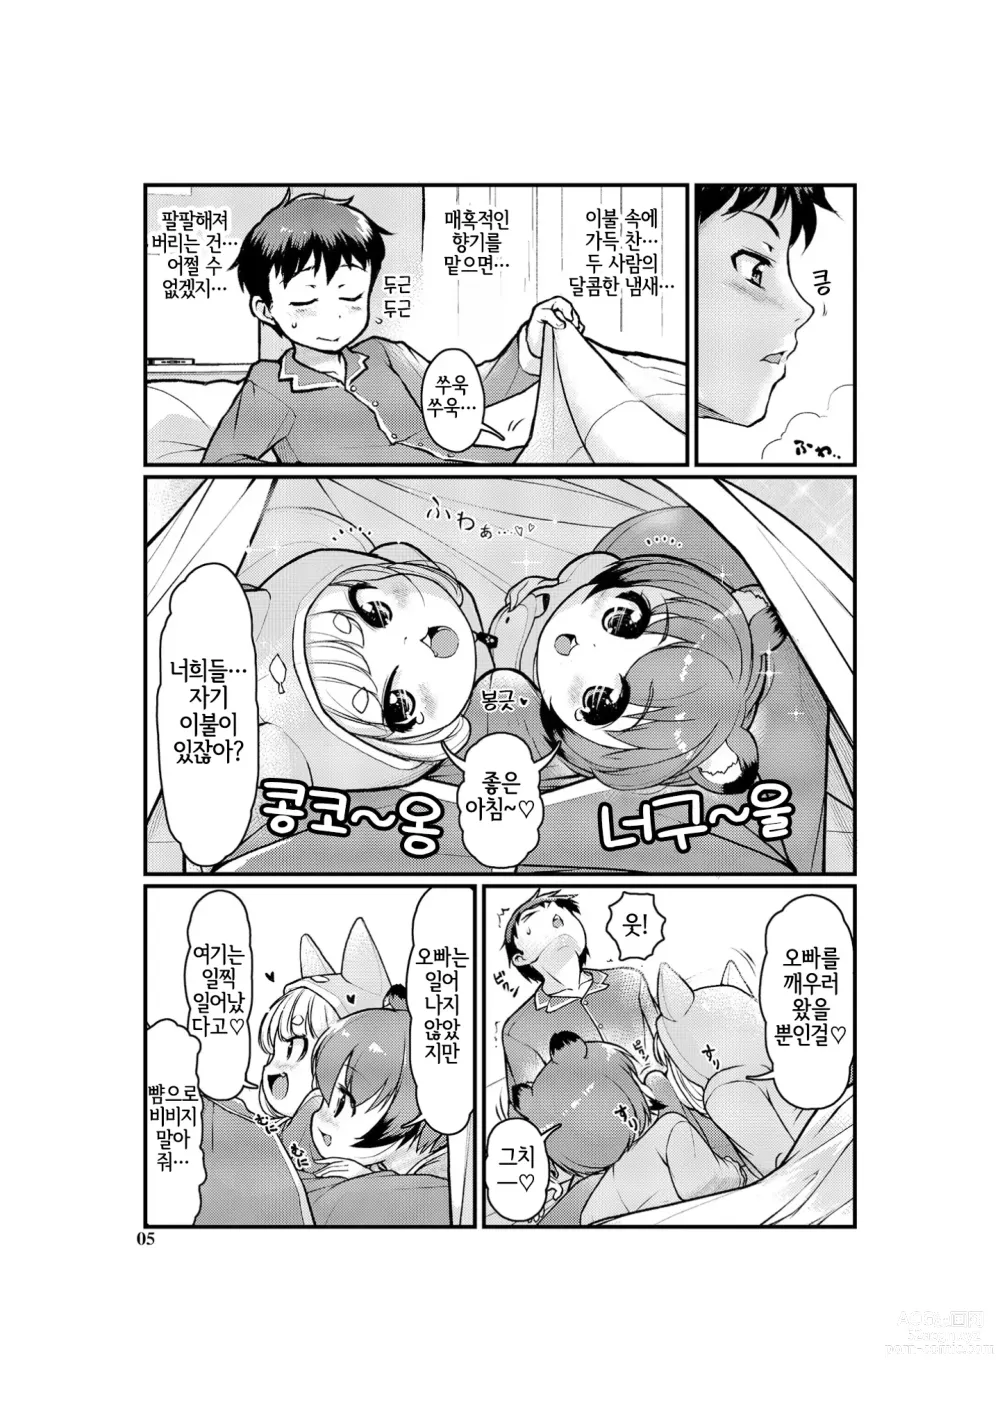 Page 4 of doujinshi KemoMimi Morning Routine 1